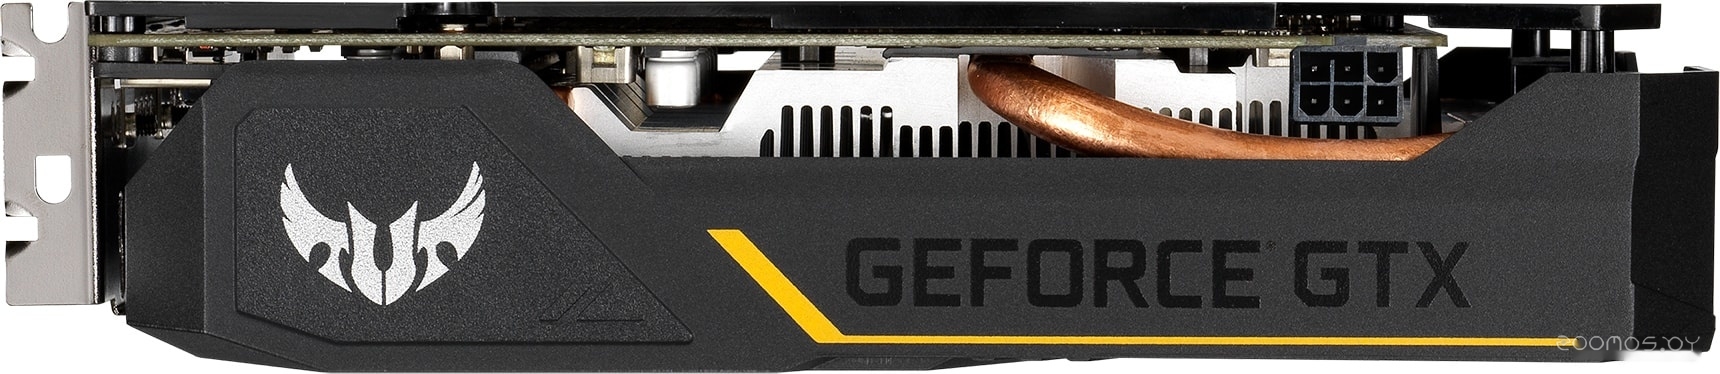  Asus TUF Gaming GeForce GTX 1650 OC 4GB GDDR6     